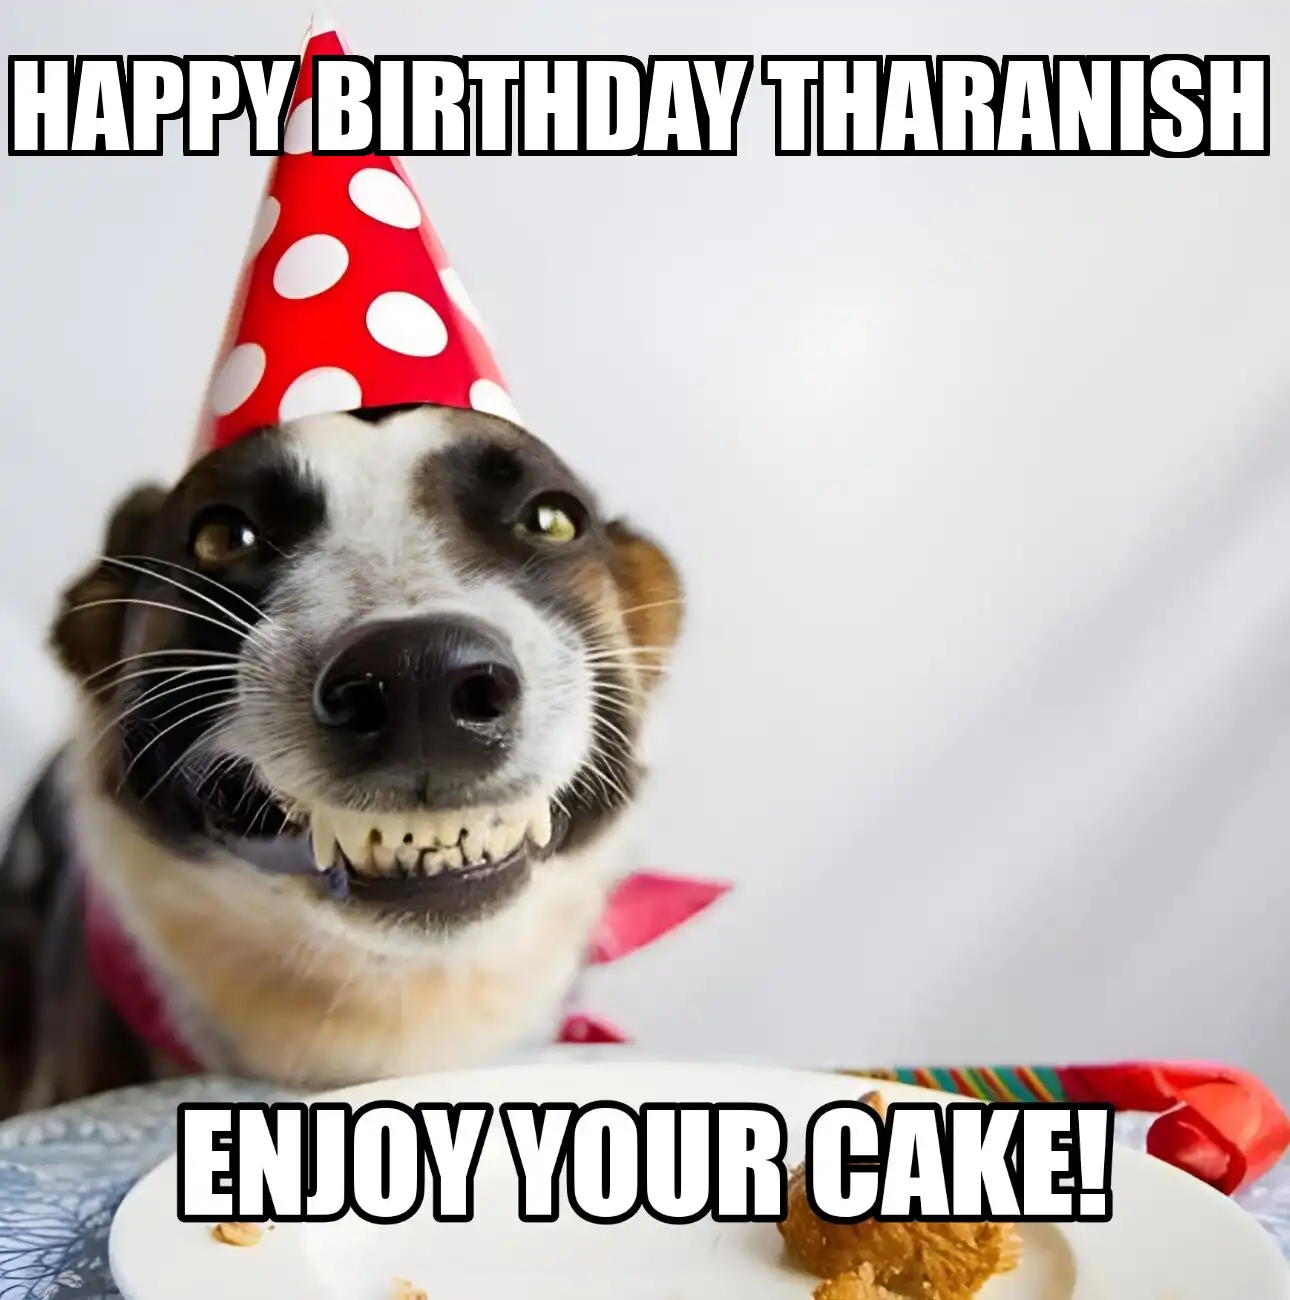 Happy Birthday Tharanish Enjoy Your Cake Dog Meme